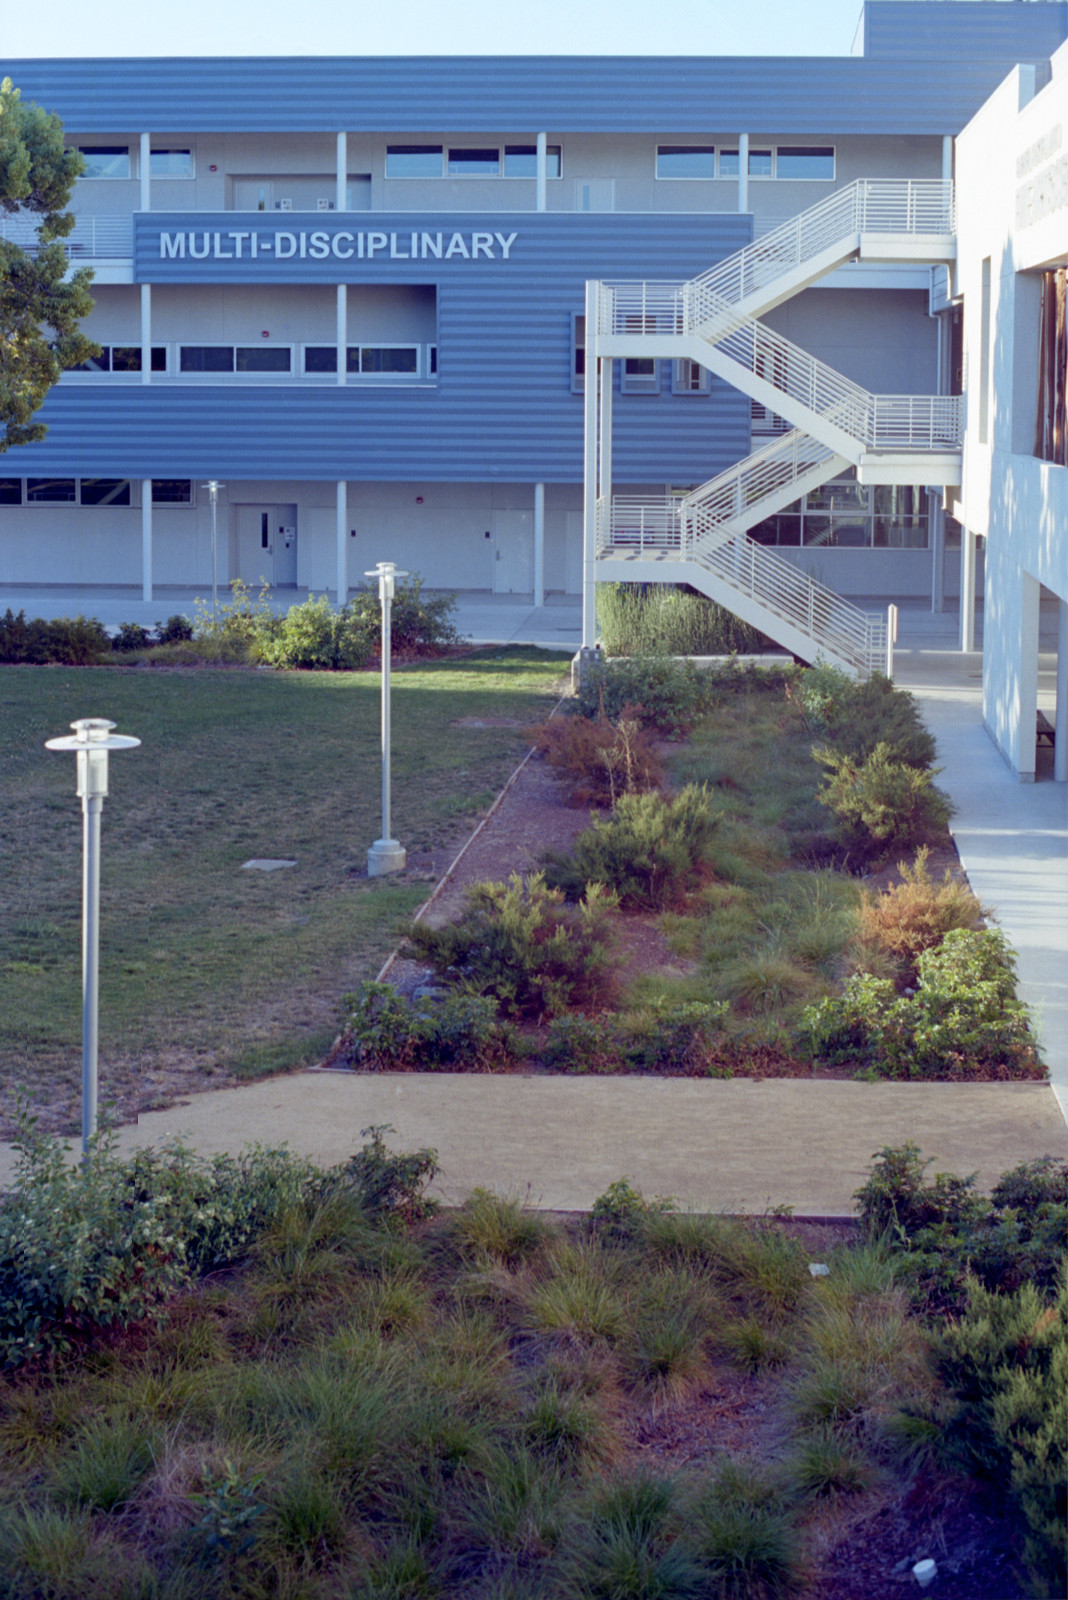 Multi-Disciplinary Building and garden at San Jose City College.